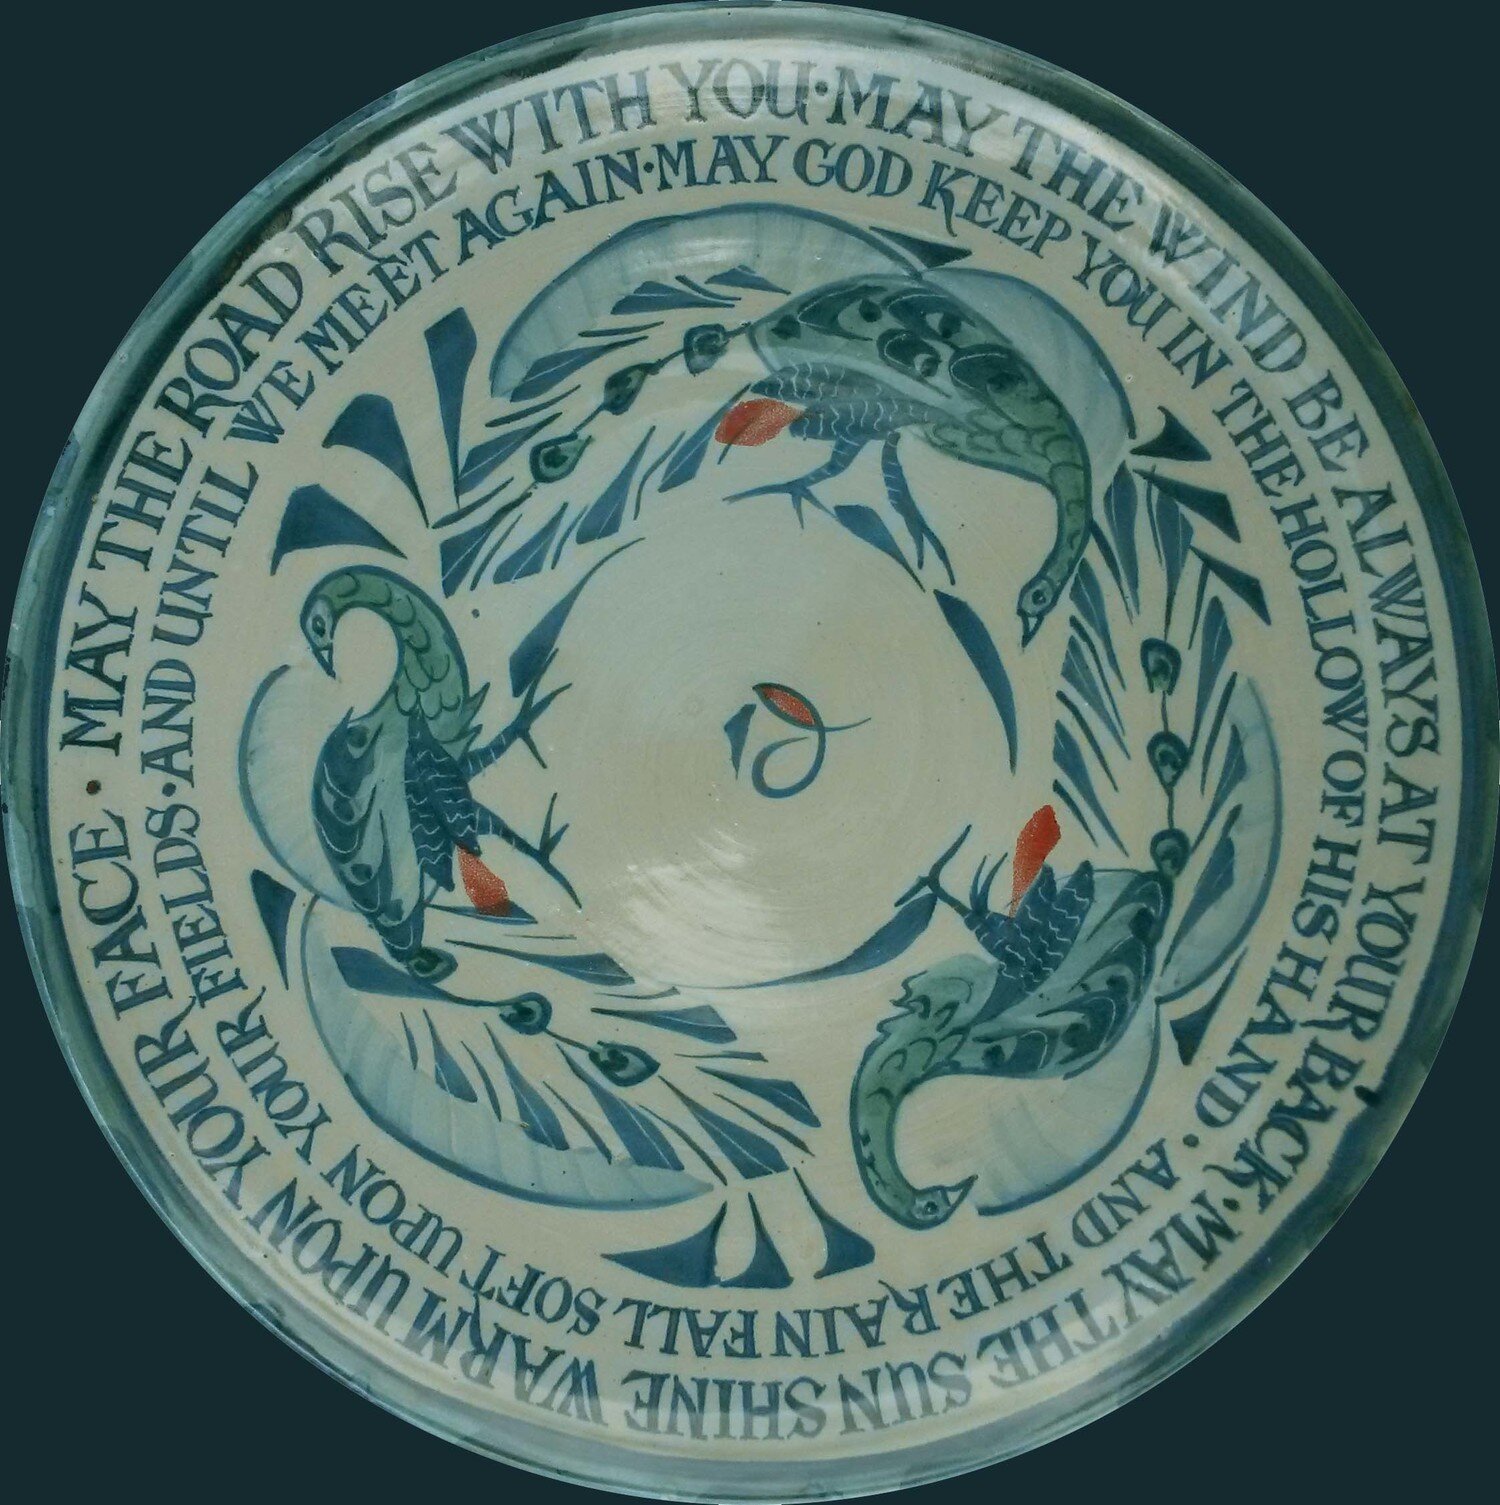  18. Gaelic blessing plate 